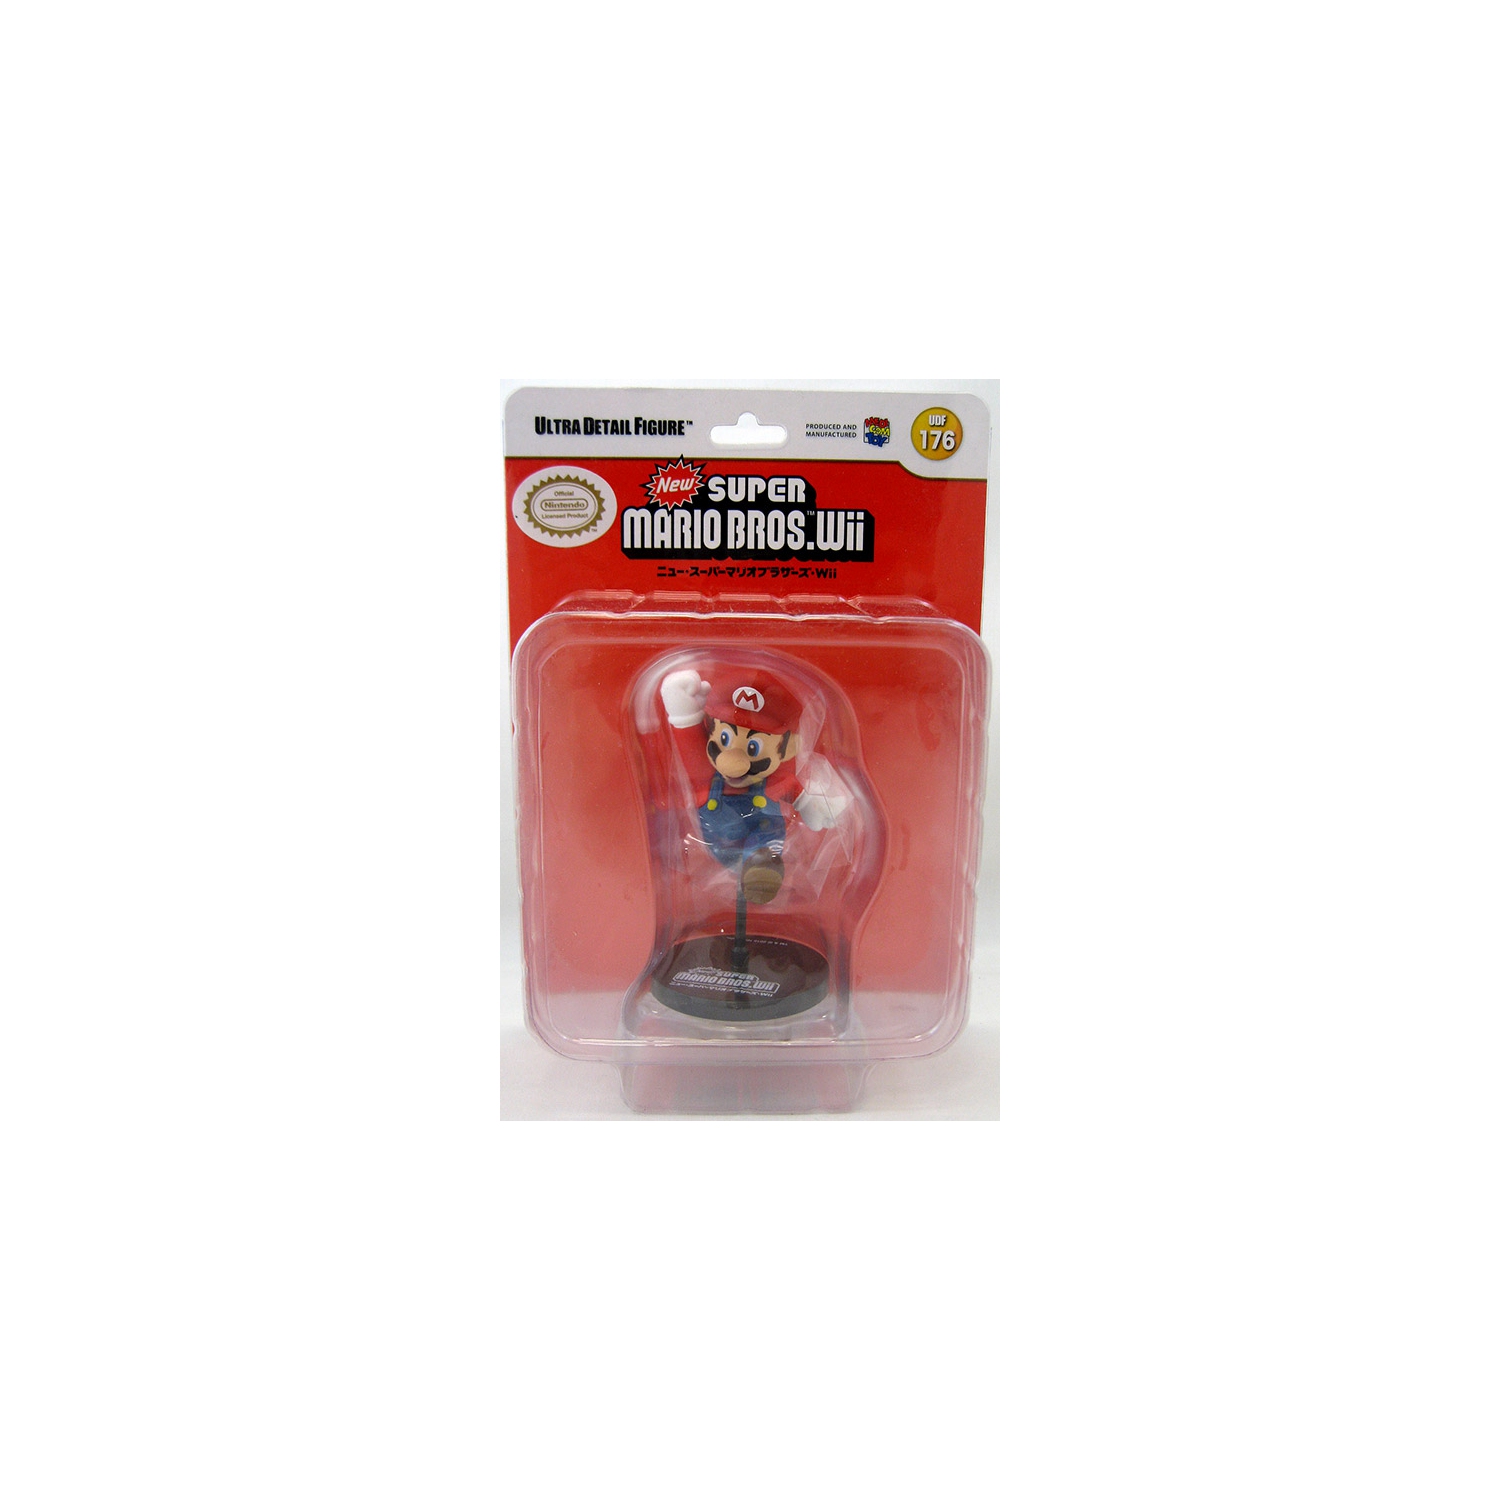 Nintendo Ultra Detail Figure Series 2 Inch Static Figure Super Mario Brothers Wii - Mario UDF #176